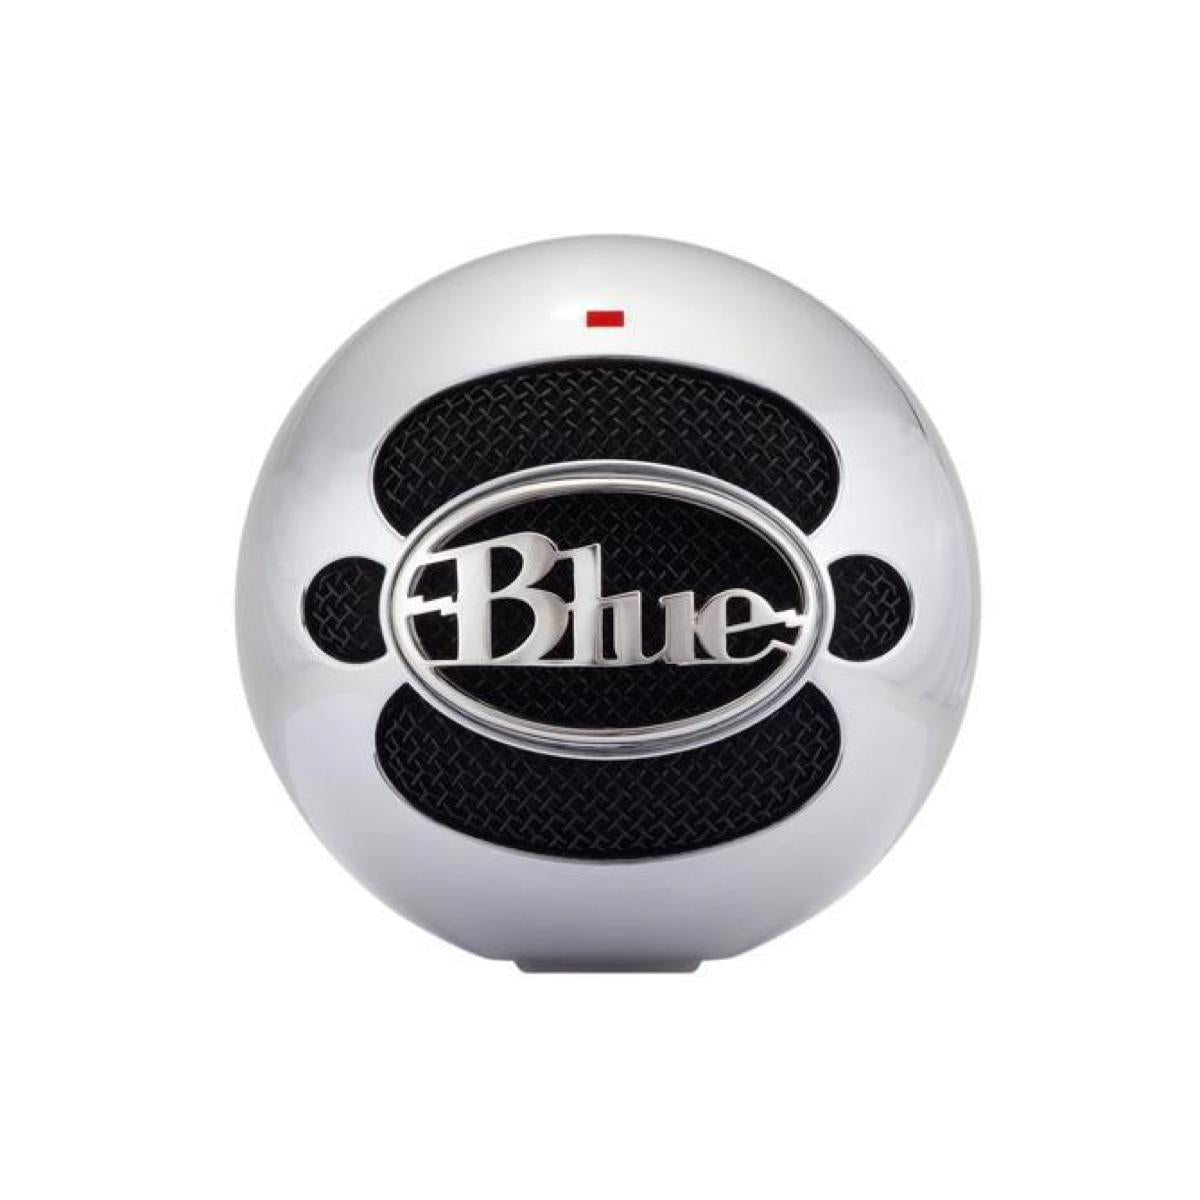 Blue Microphones Snowball - USB Microphone - AVStore